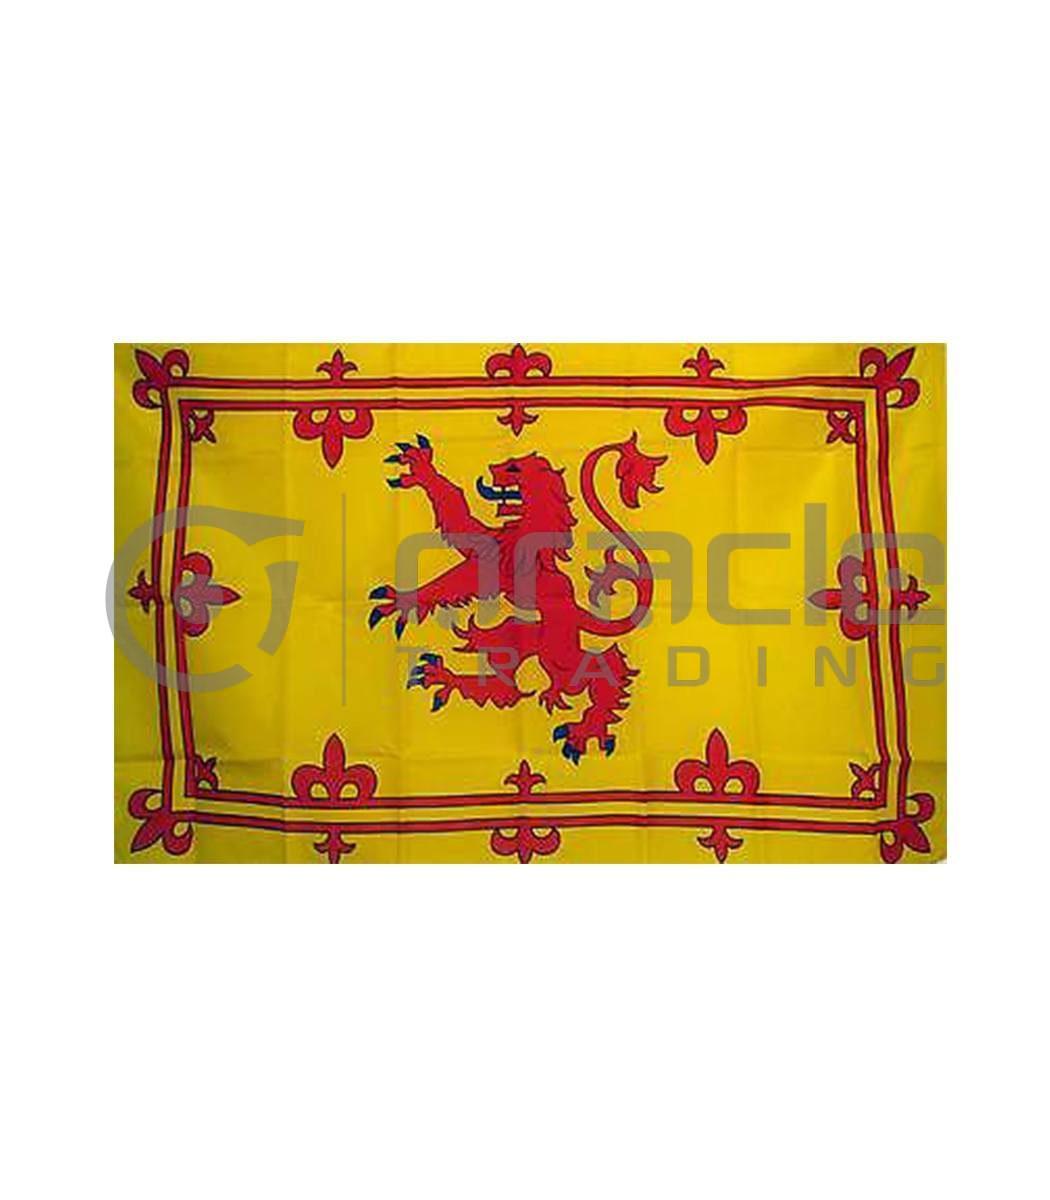 Large 3'x5' Scotland Flag - Rampant Lion